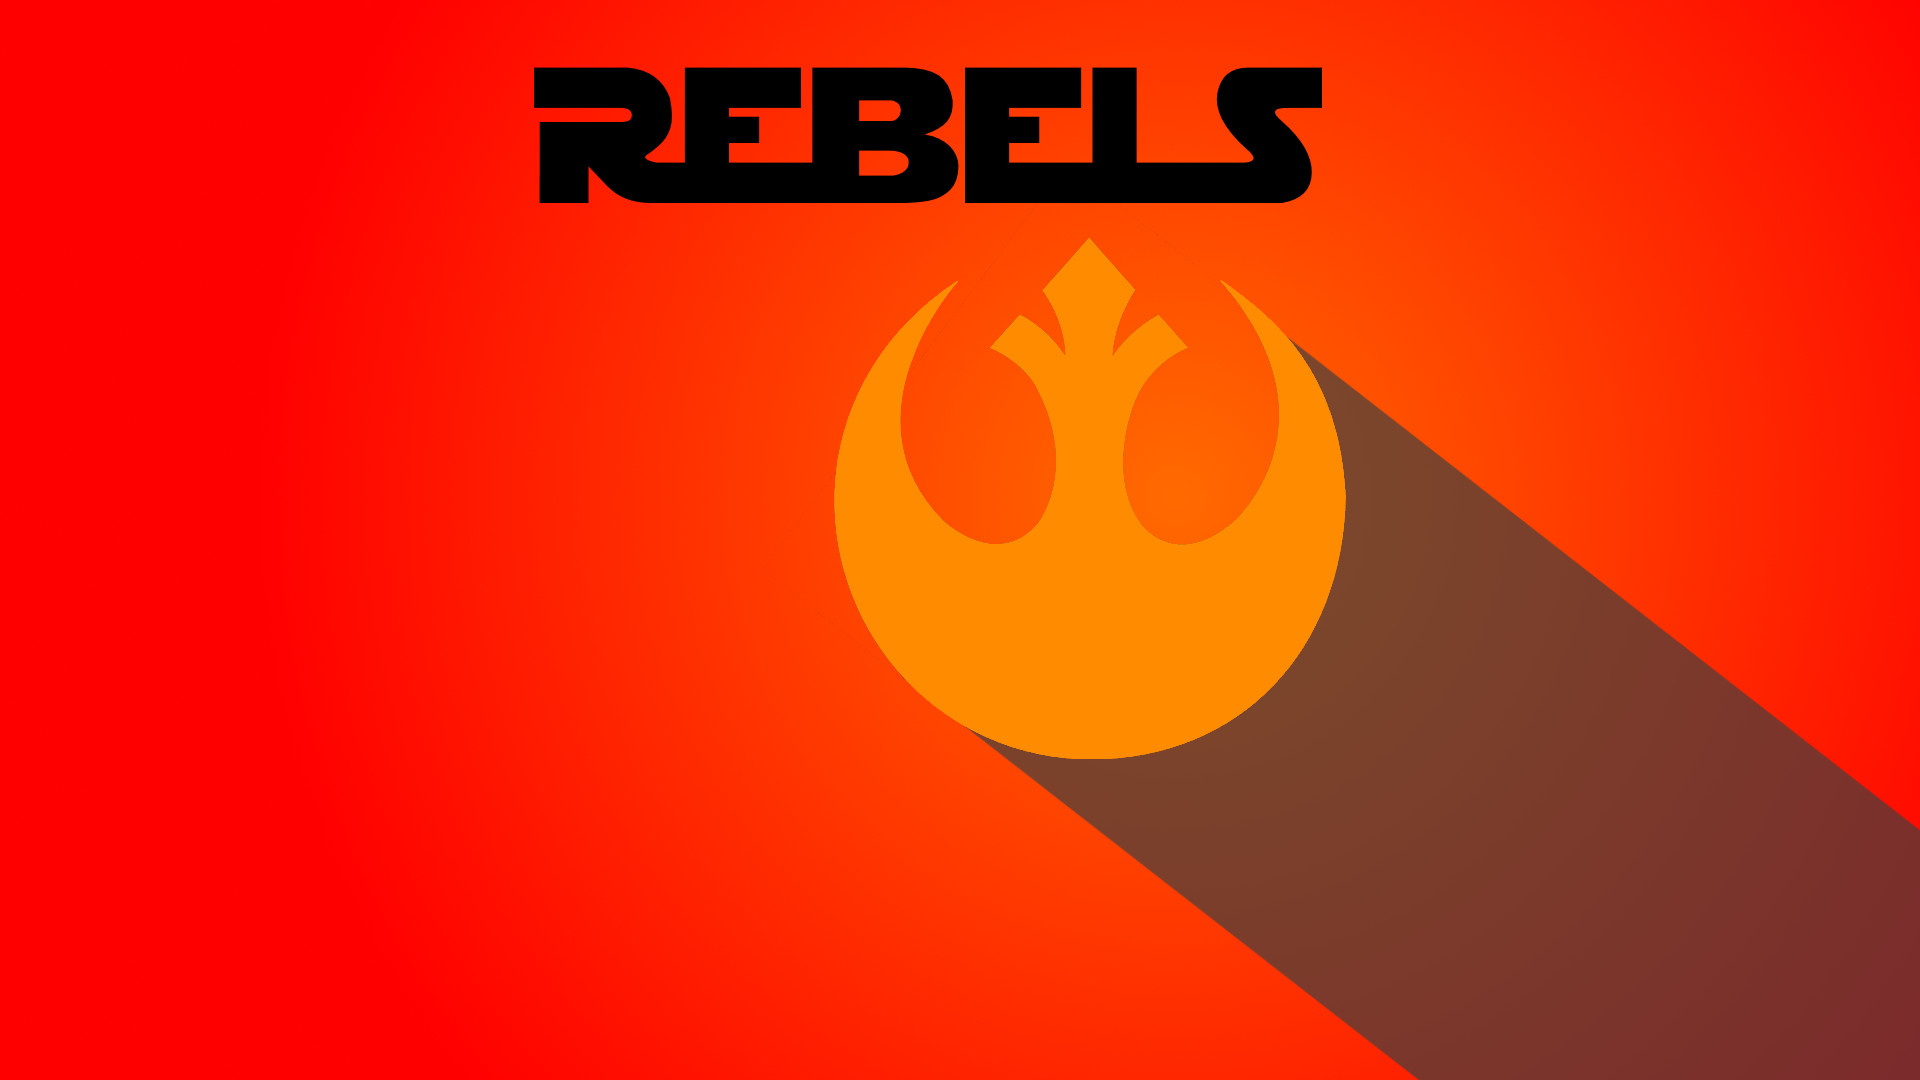 1920x1080 Star Wars Rebels Wallpaper by BiloBoy Star Wars Rebels Wallpaper by BiloBoy